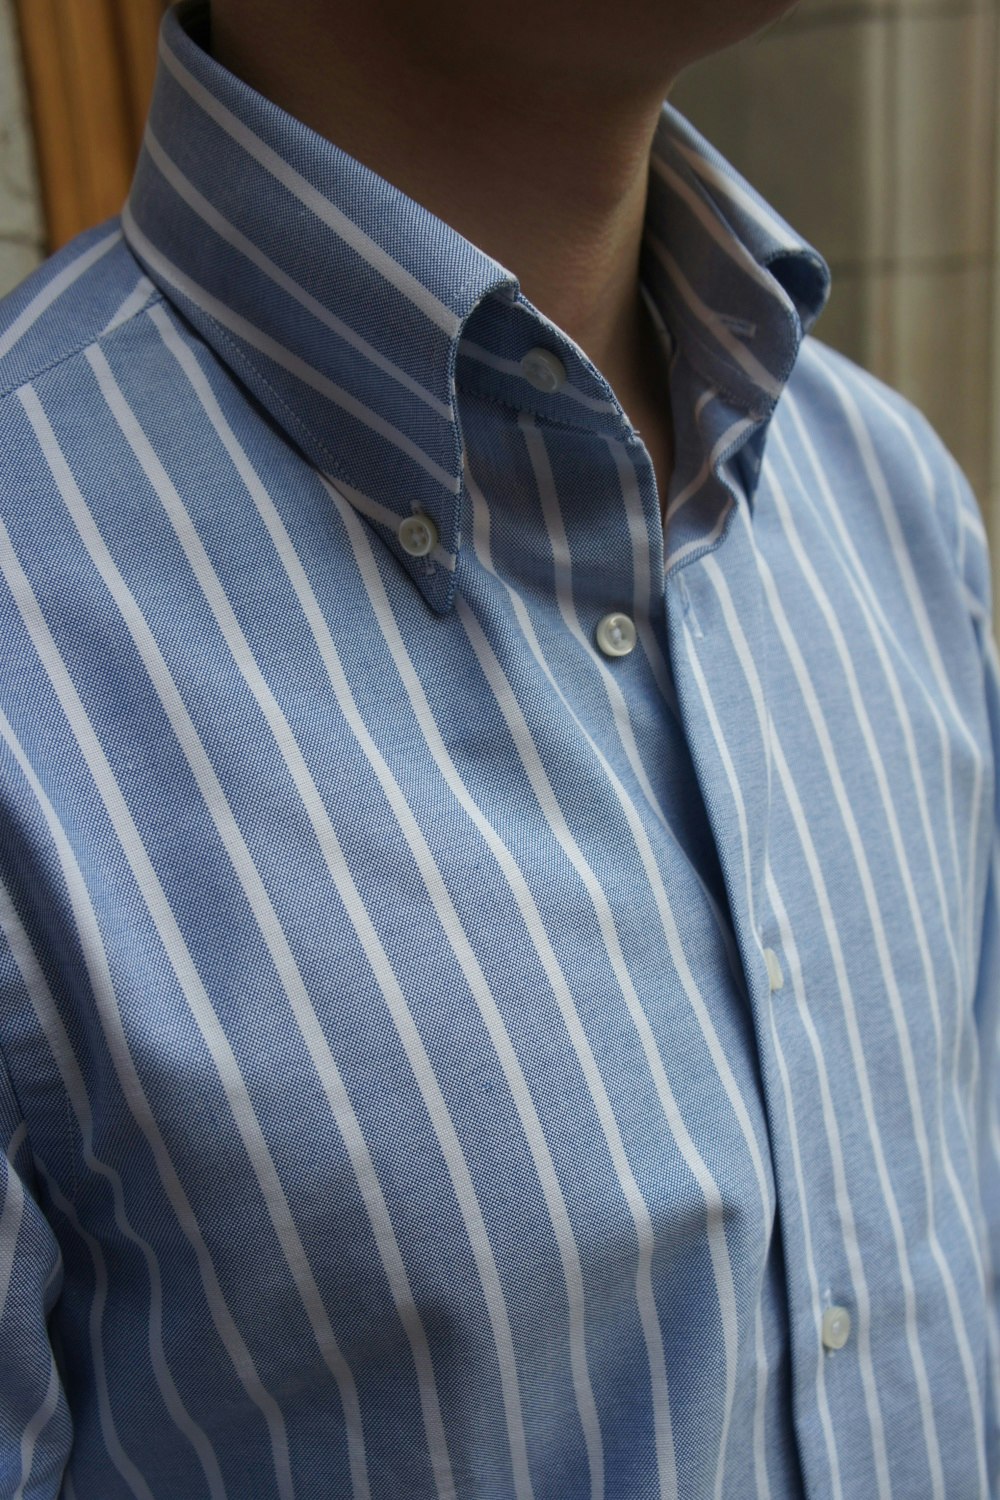 Heavy Pinstripe Oxford Button Down Shirt - Light Blue/White